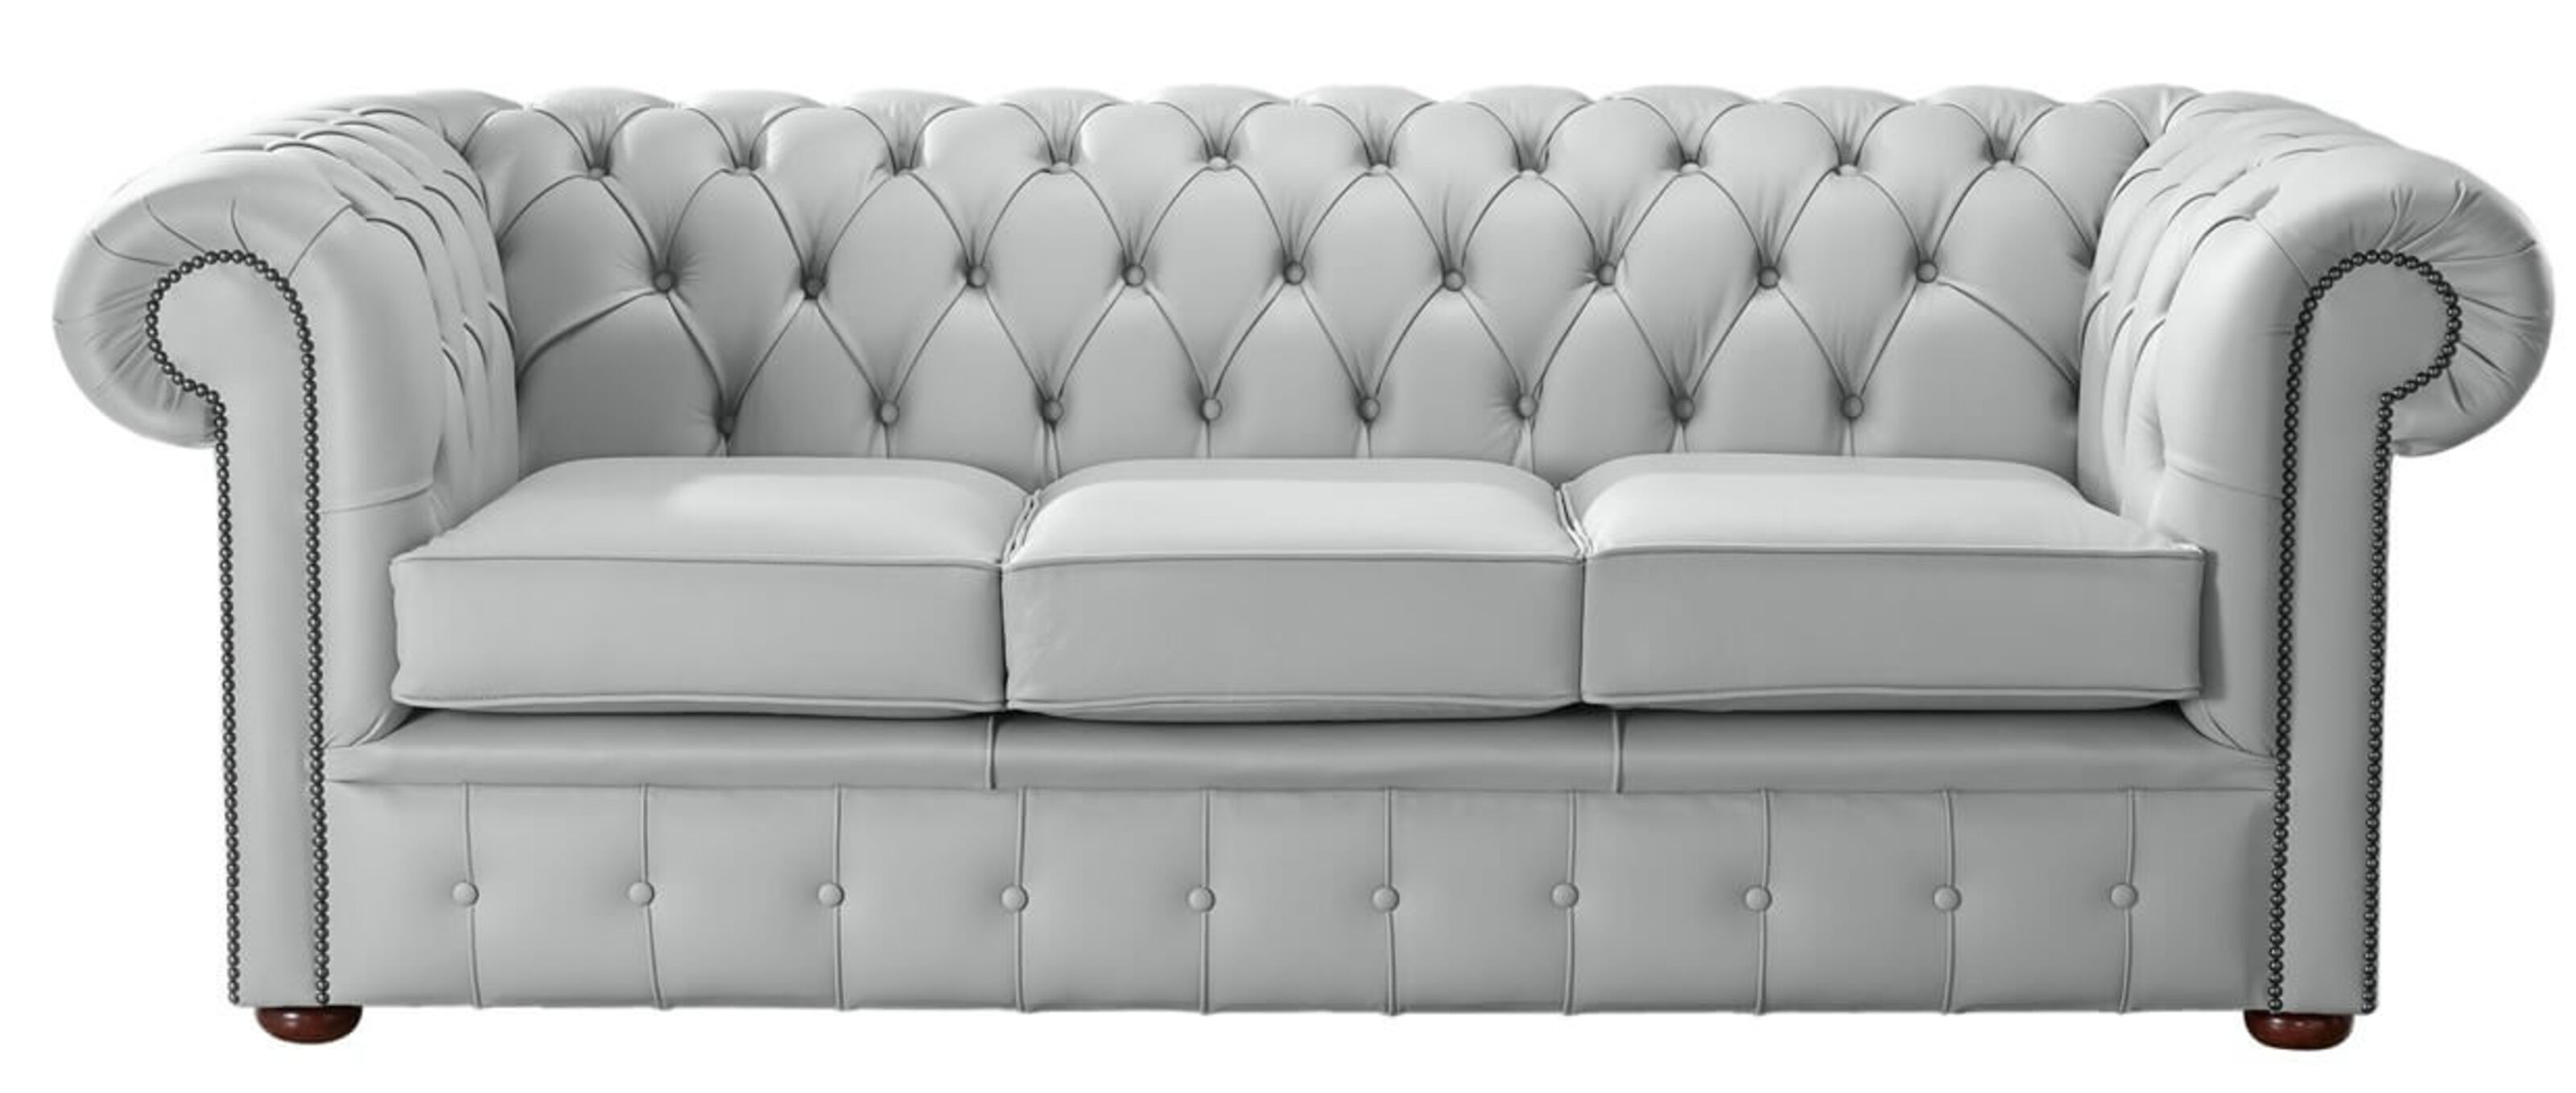 leather grey leather sofa